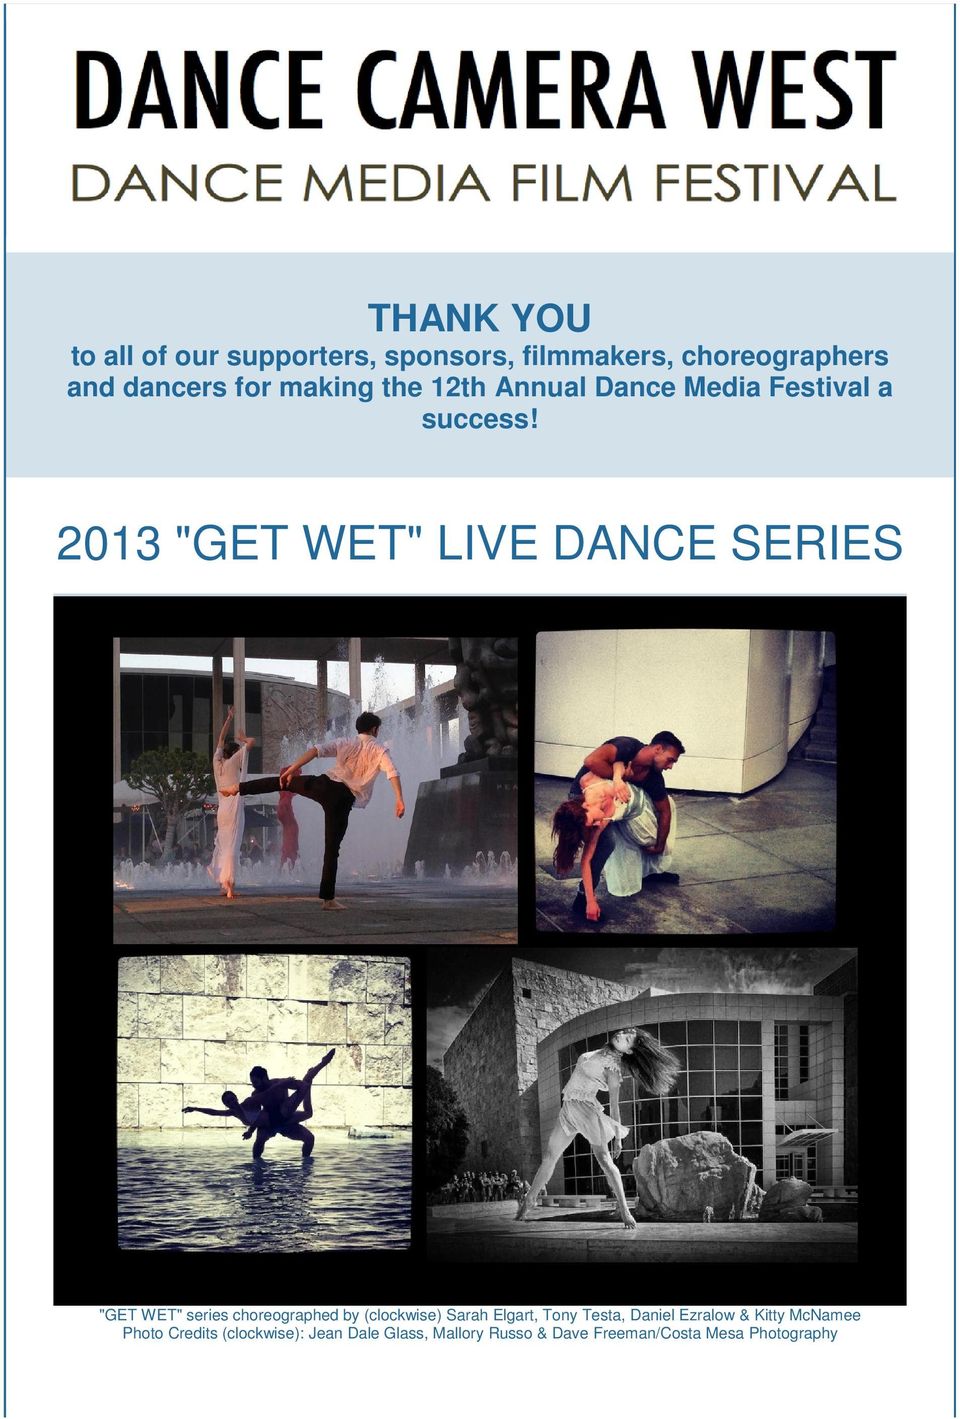 2013 "GET WET" LIVE DANCE SERIES "GET WET" series choreographed by (clockwise) Sarah Elgart,